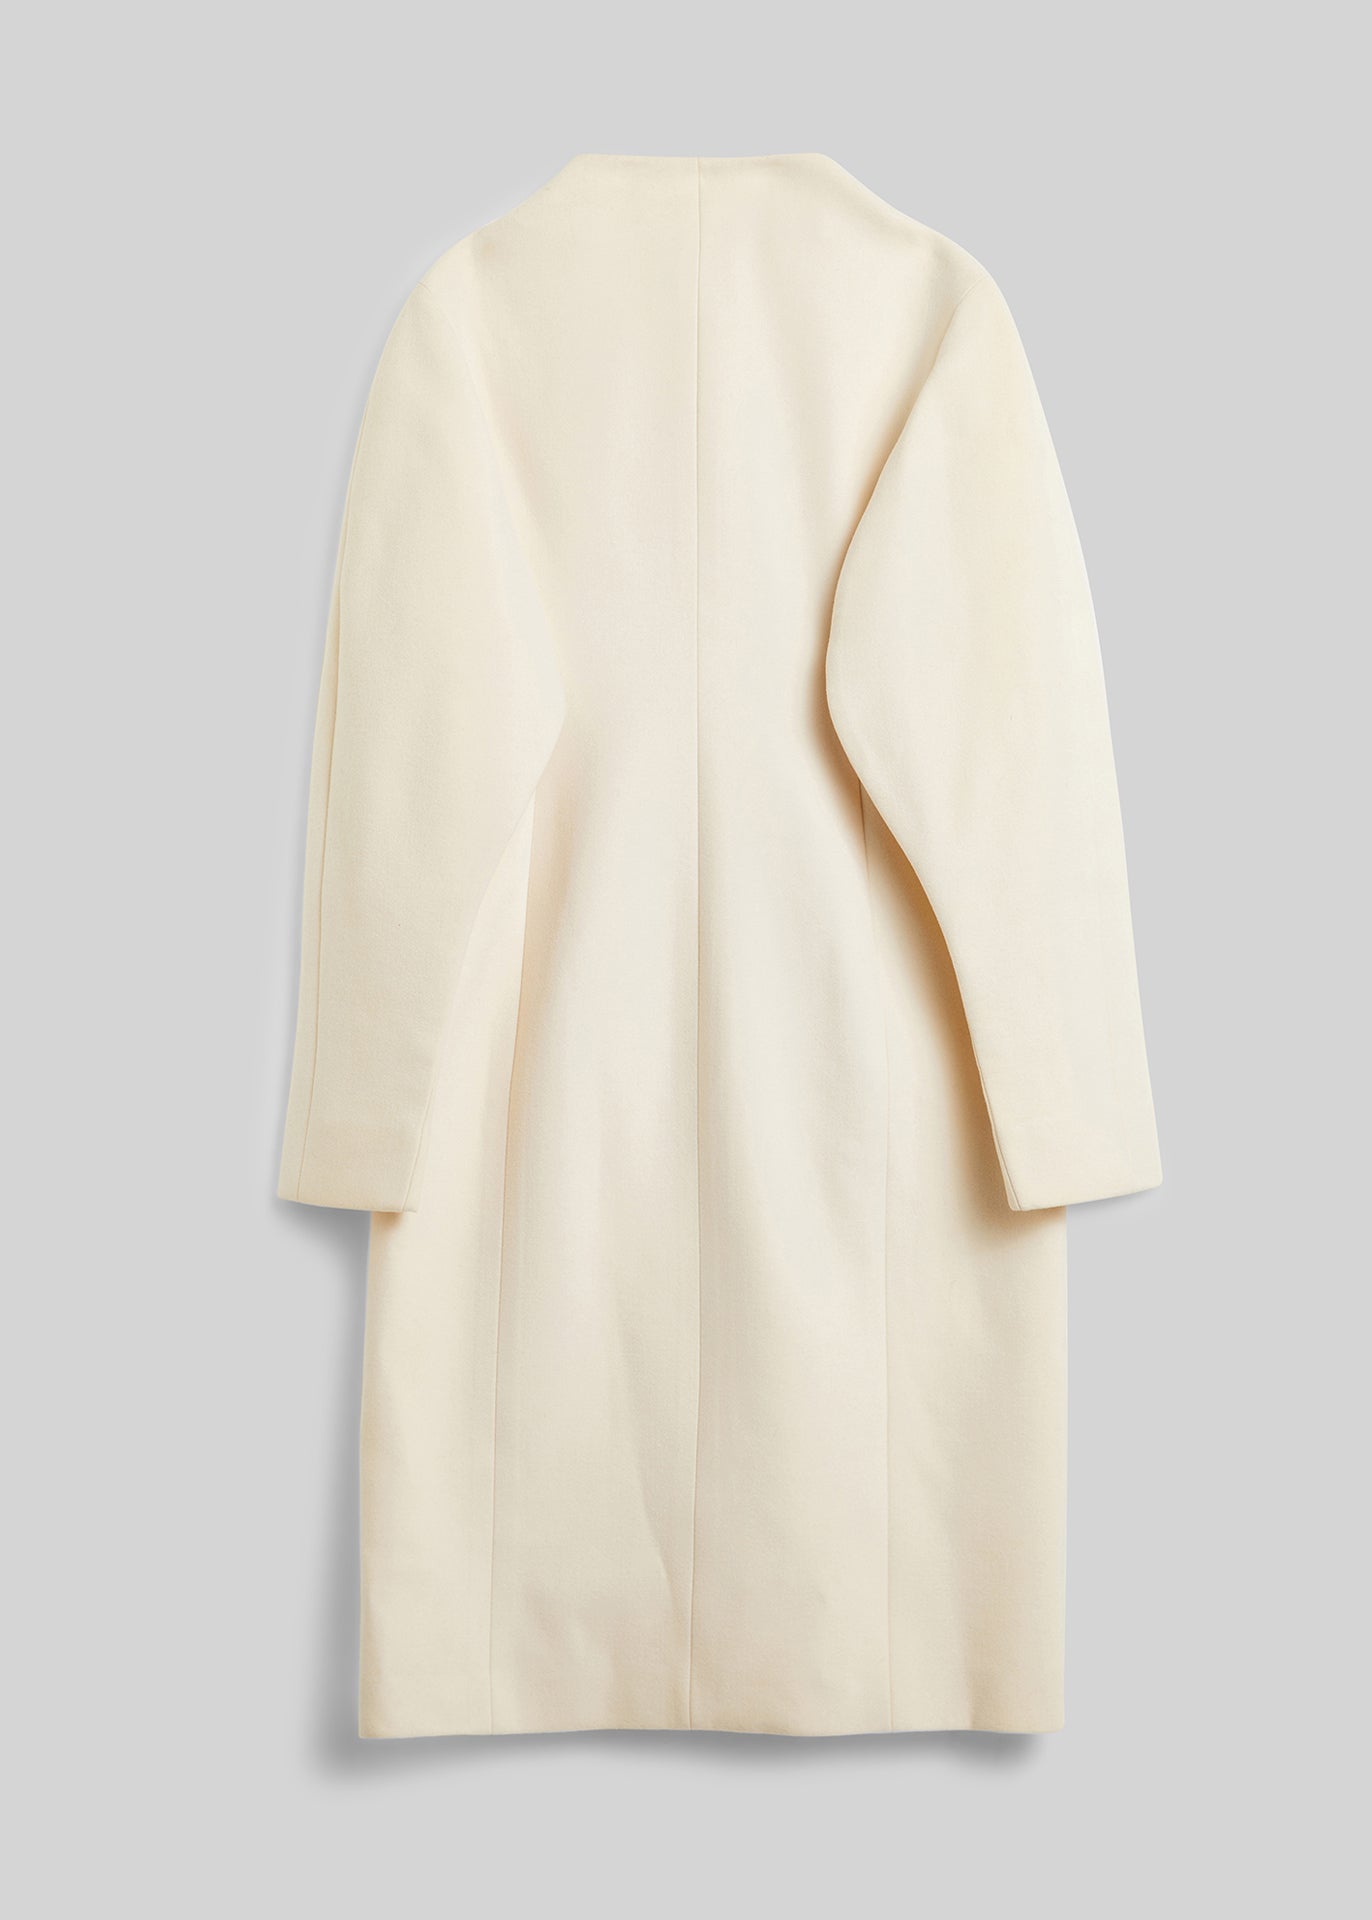 Jil Sander coat - 36